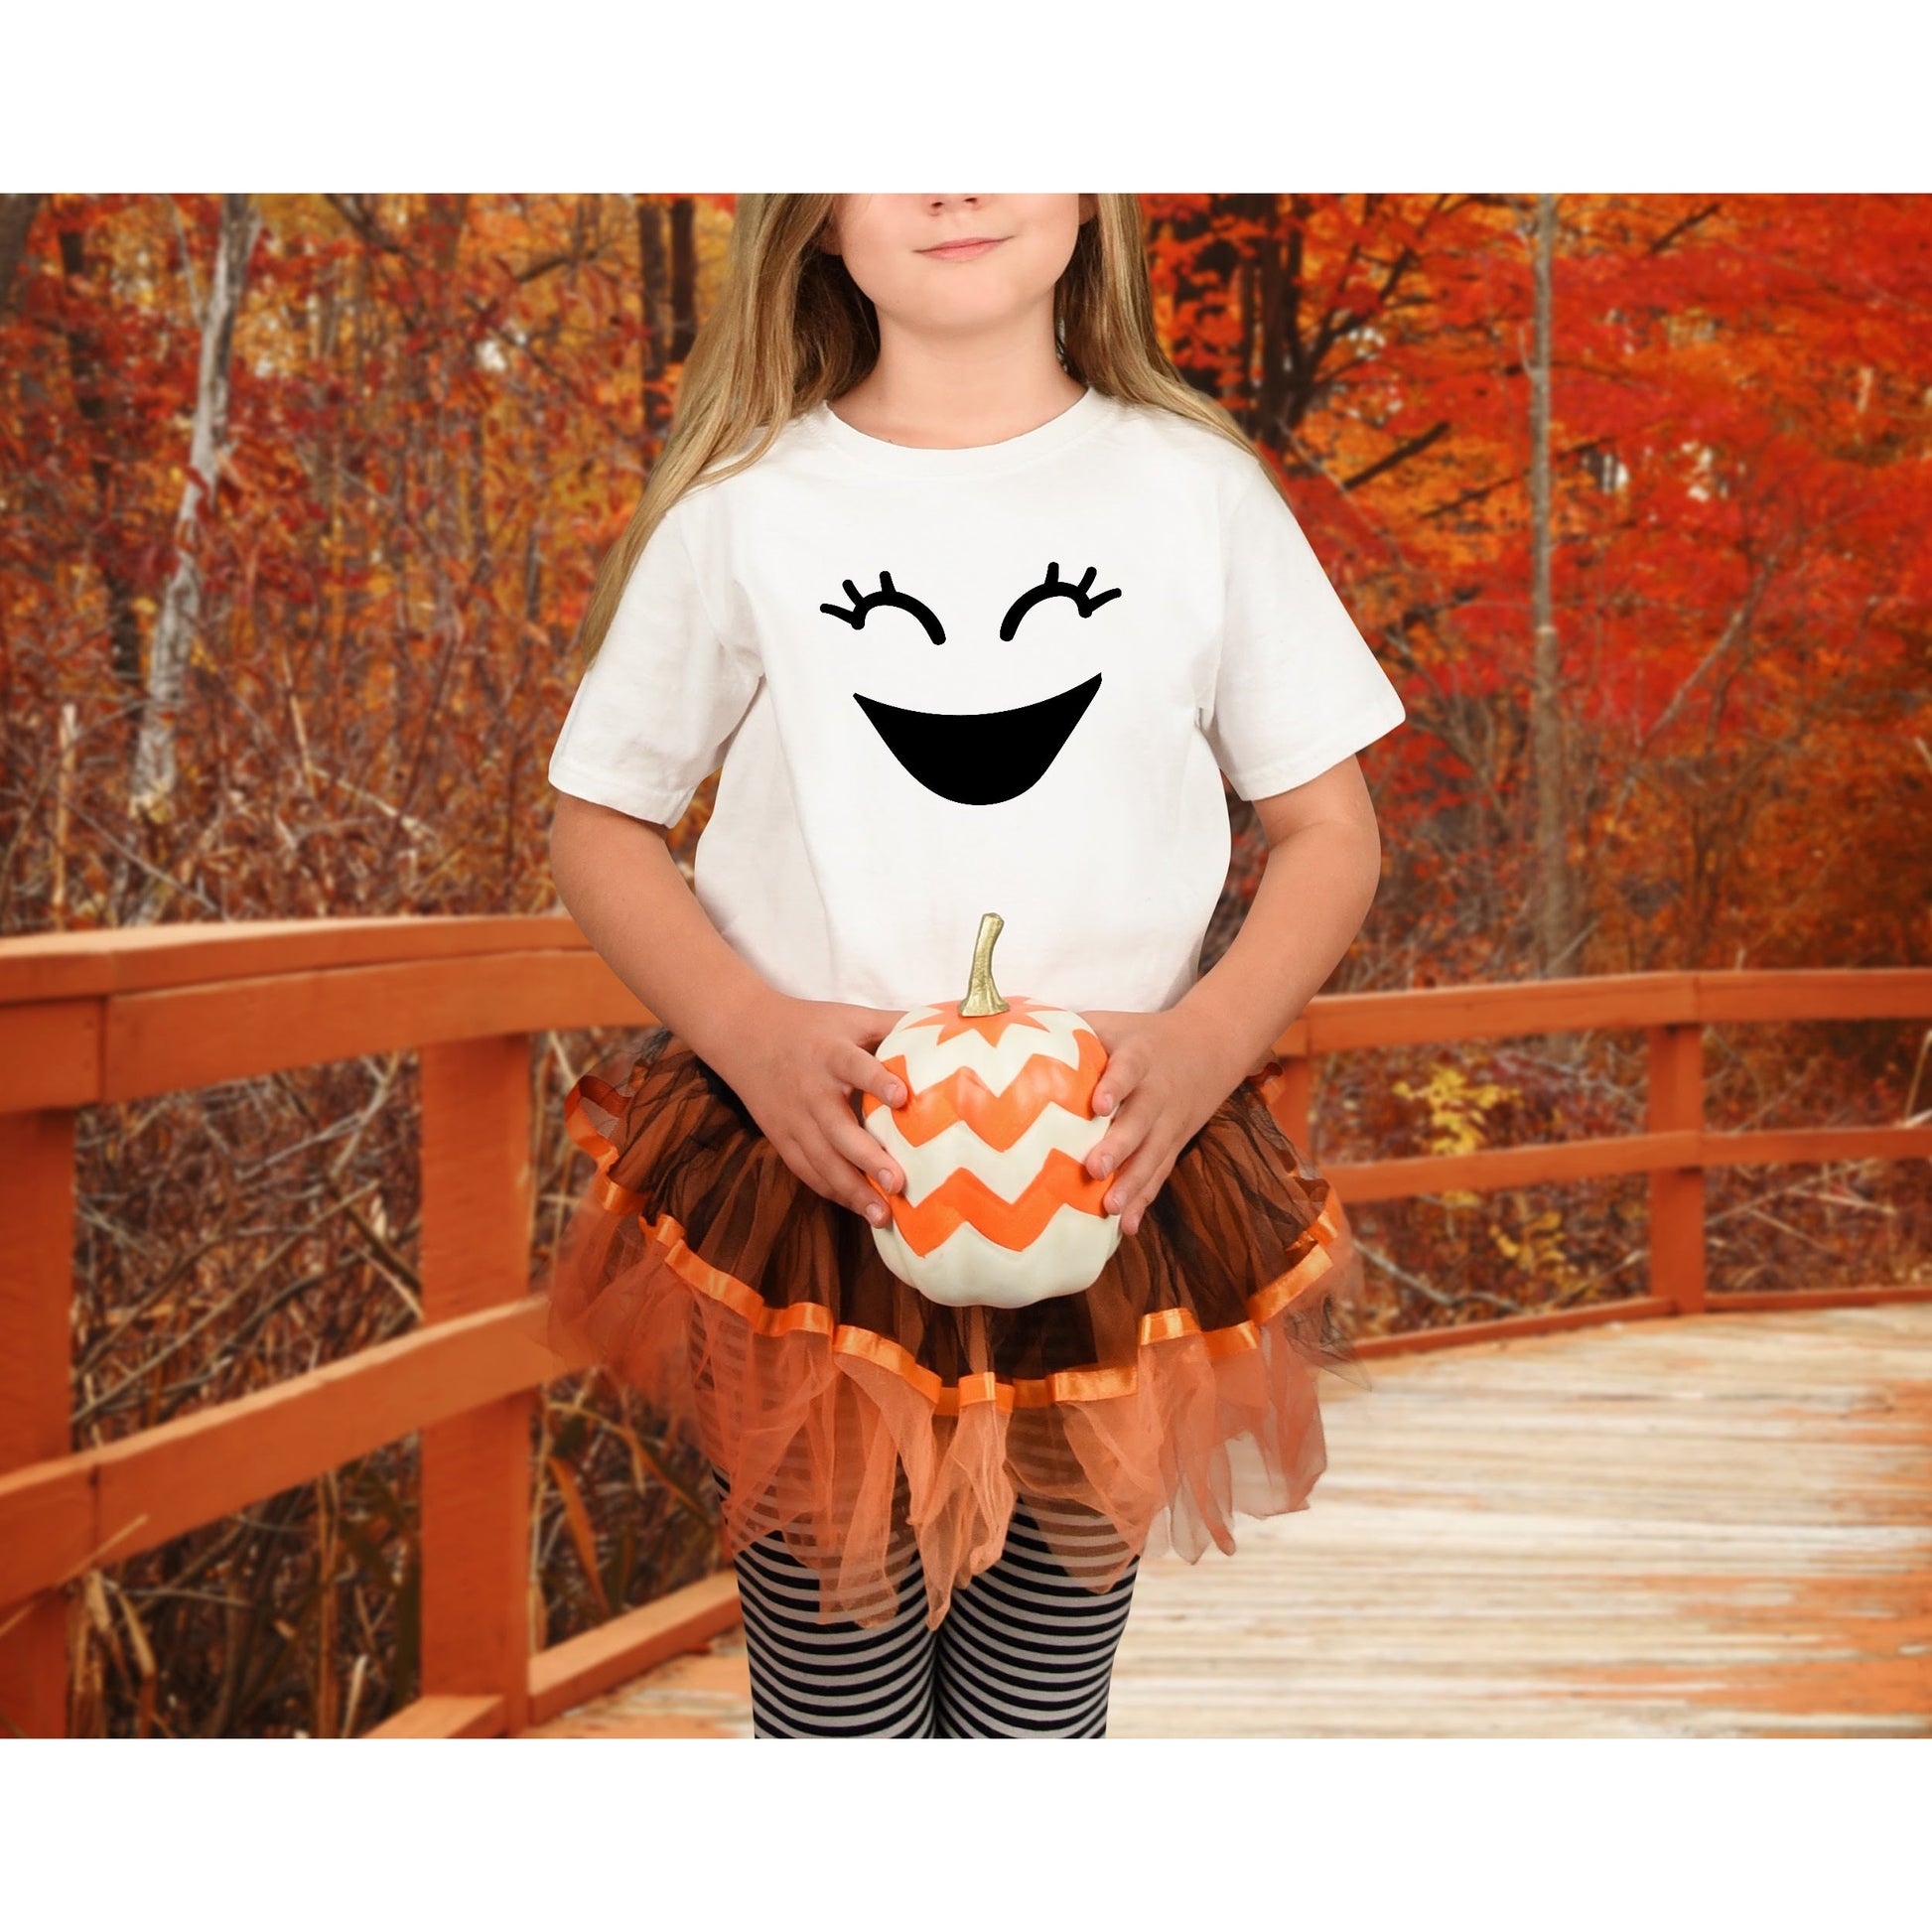 Ghost Toddler Tshirt, Toddler Fall Shirt, Pumpkin Patch Tshirt, Ghost Halloween Costume Tshirt - Premium Kids clothes - Just $19.75! Shop now at Nine Thirty Nine Design